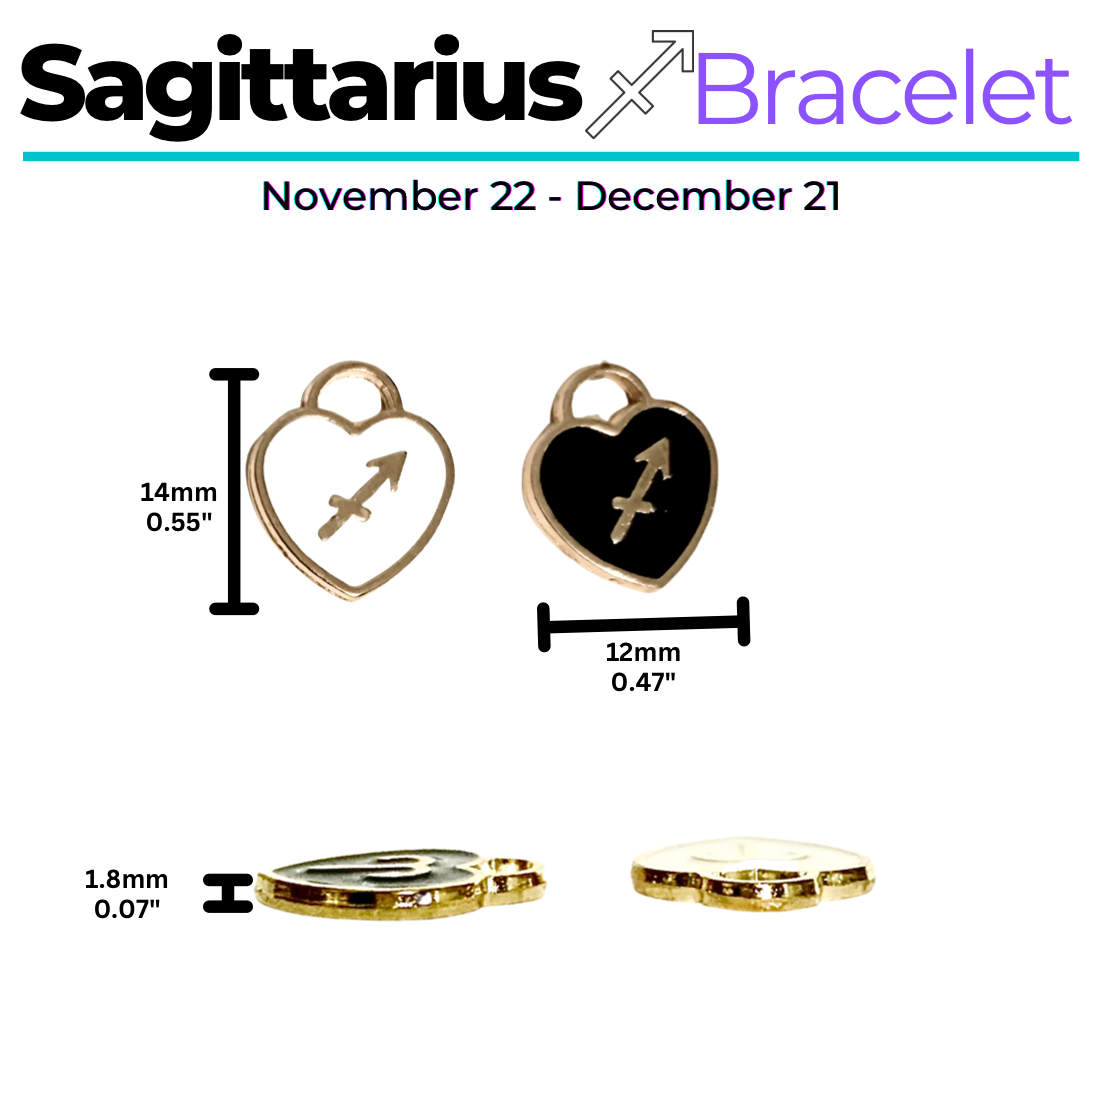 The Beaded Adjustable Zodiac Bracelet